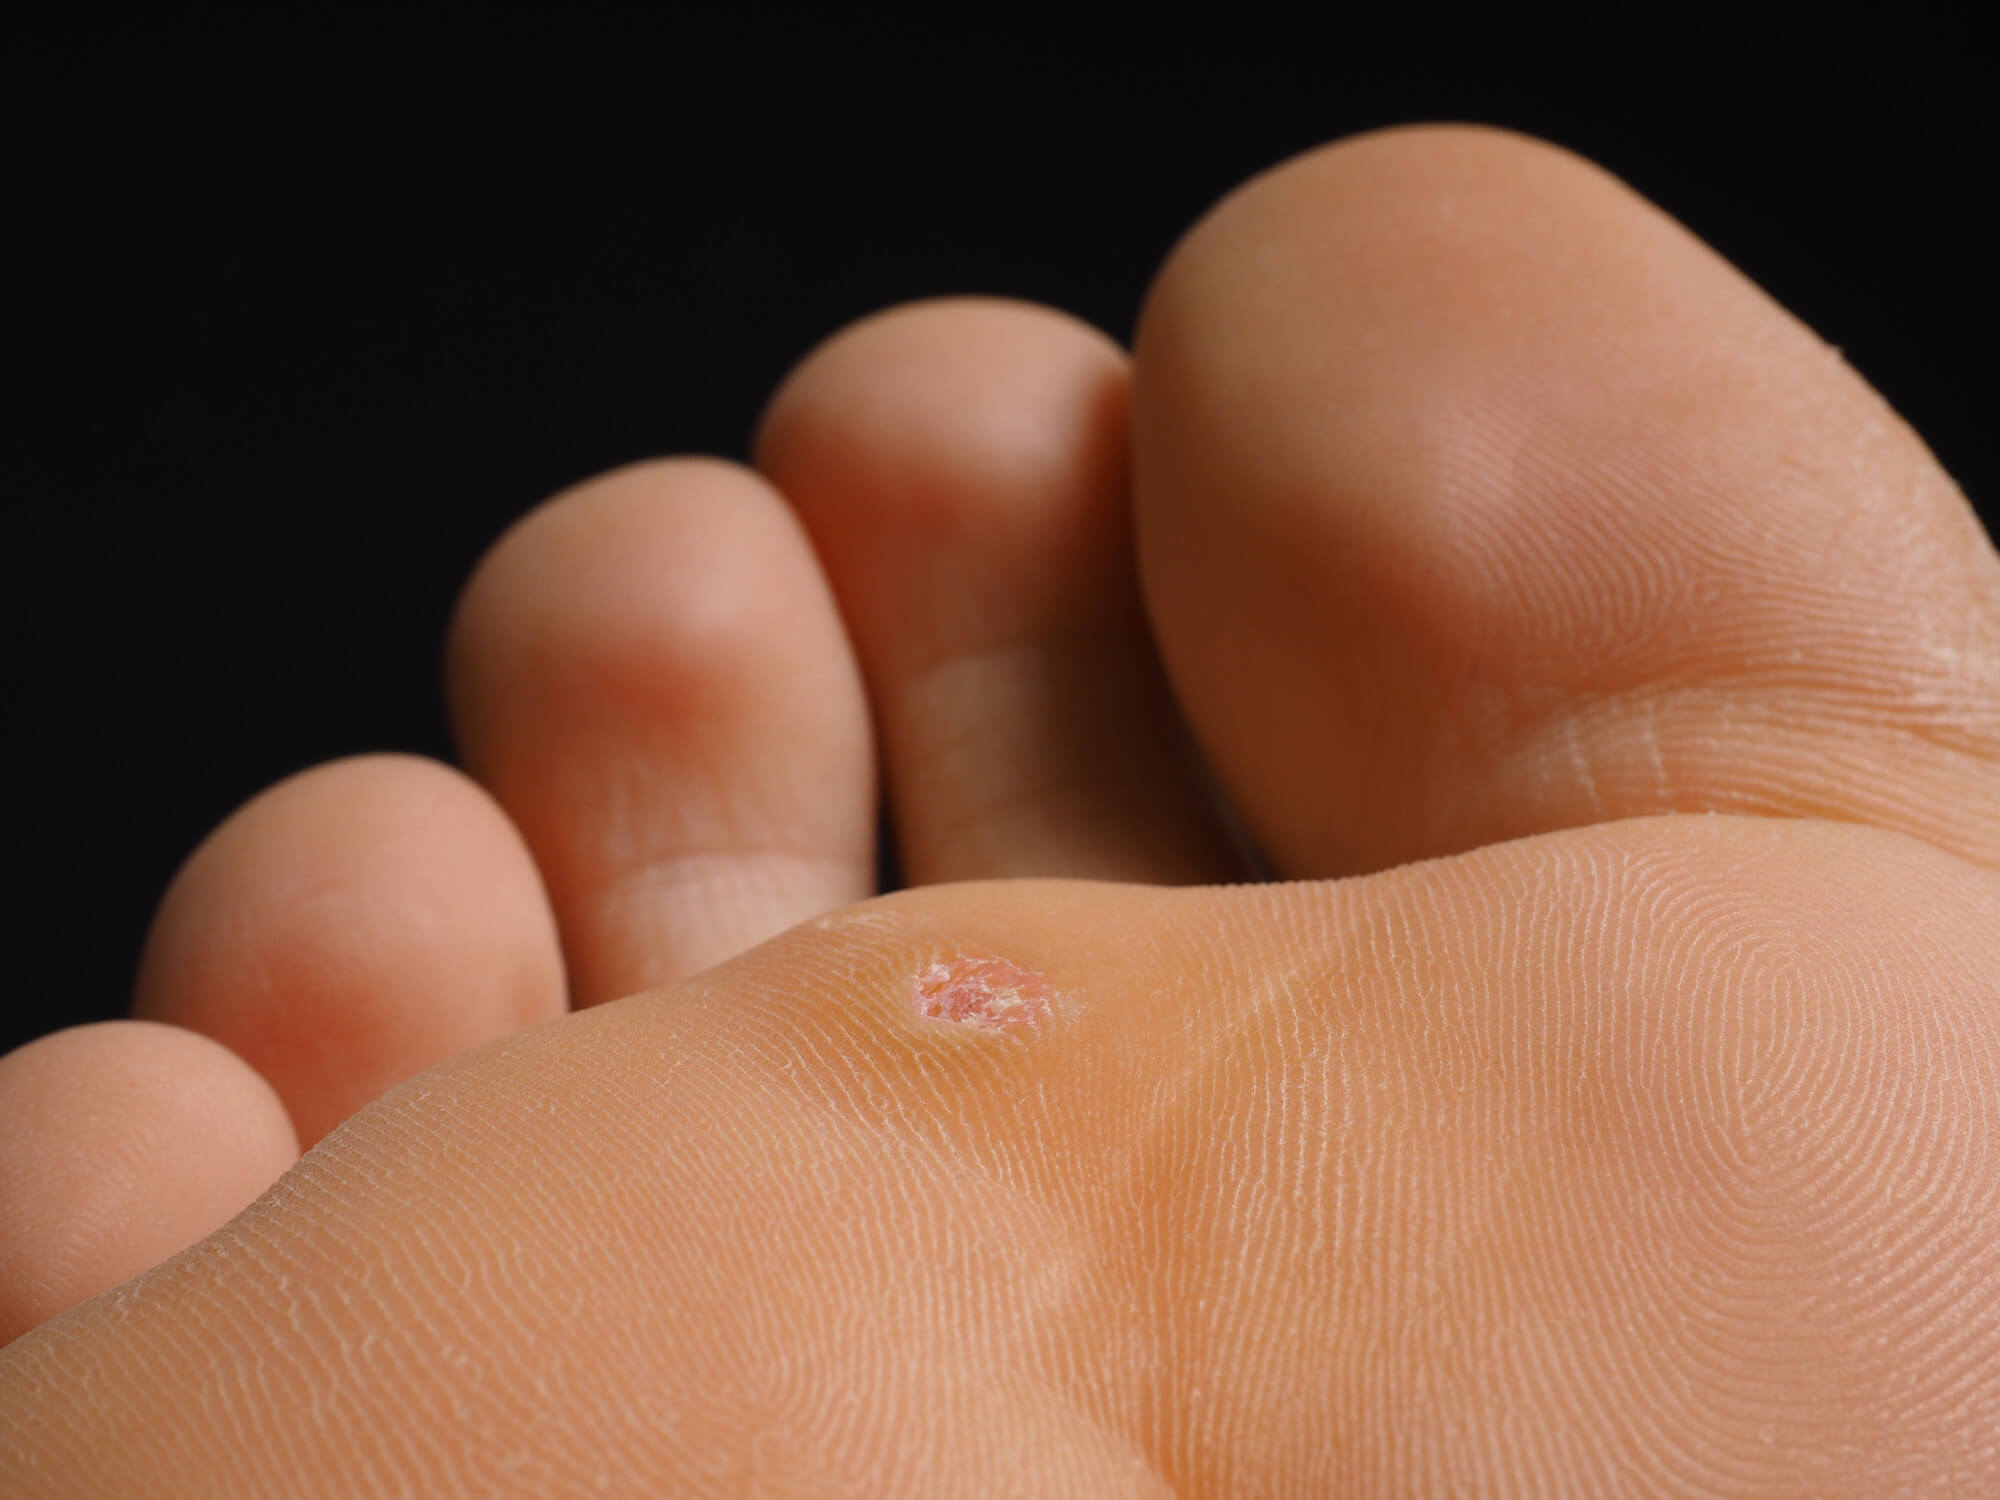 Wart on foot throbbing, 20 Best bataturi images in | Remedii naturiste, Remedii naturale, Sănătate